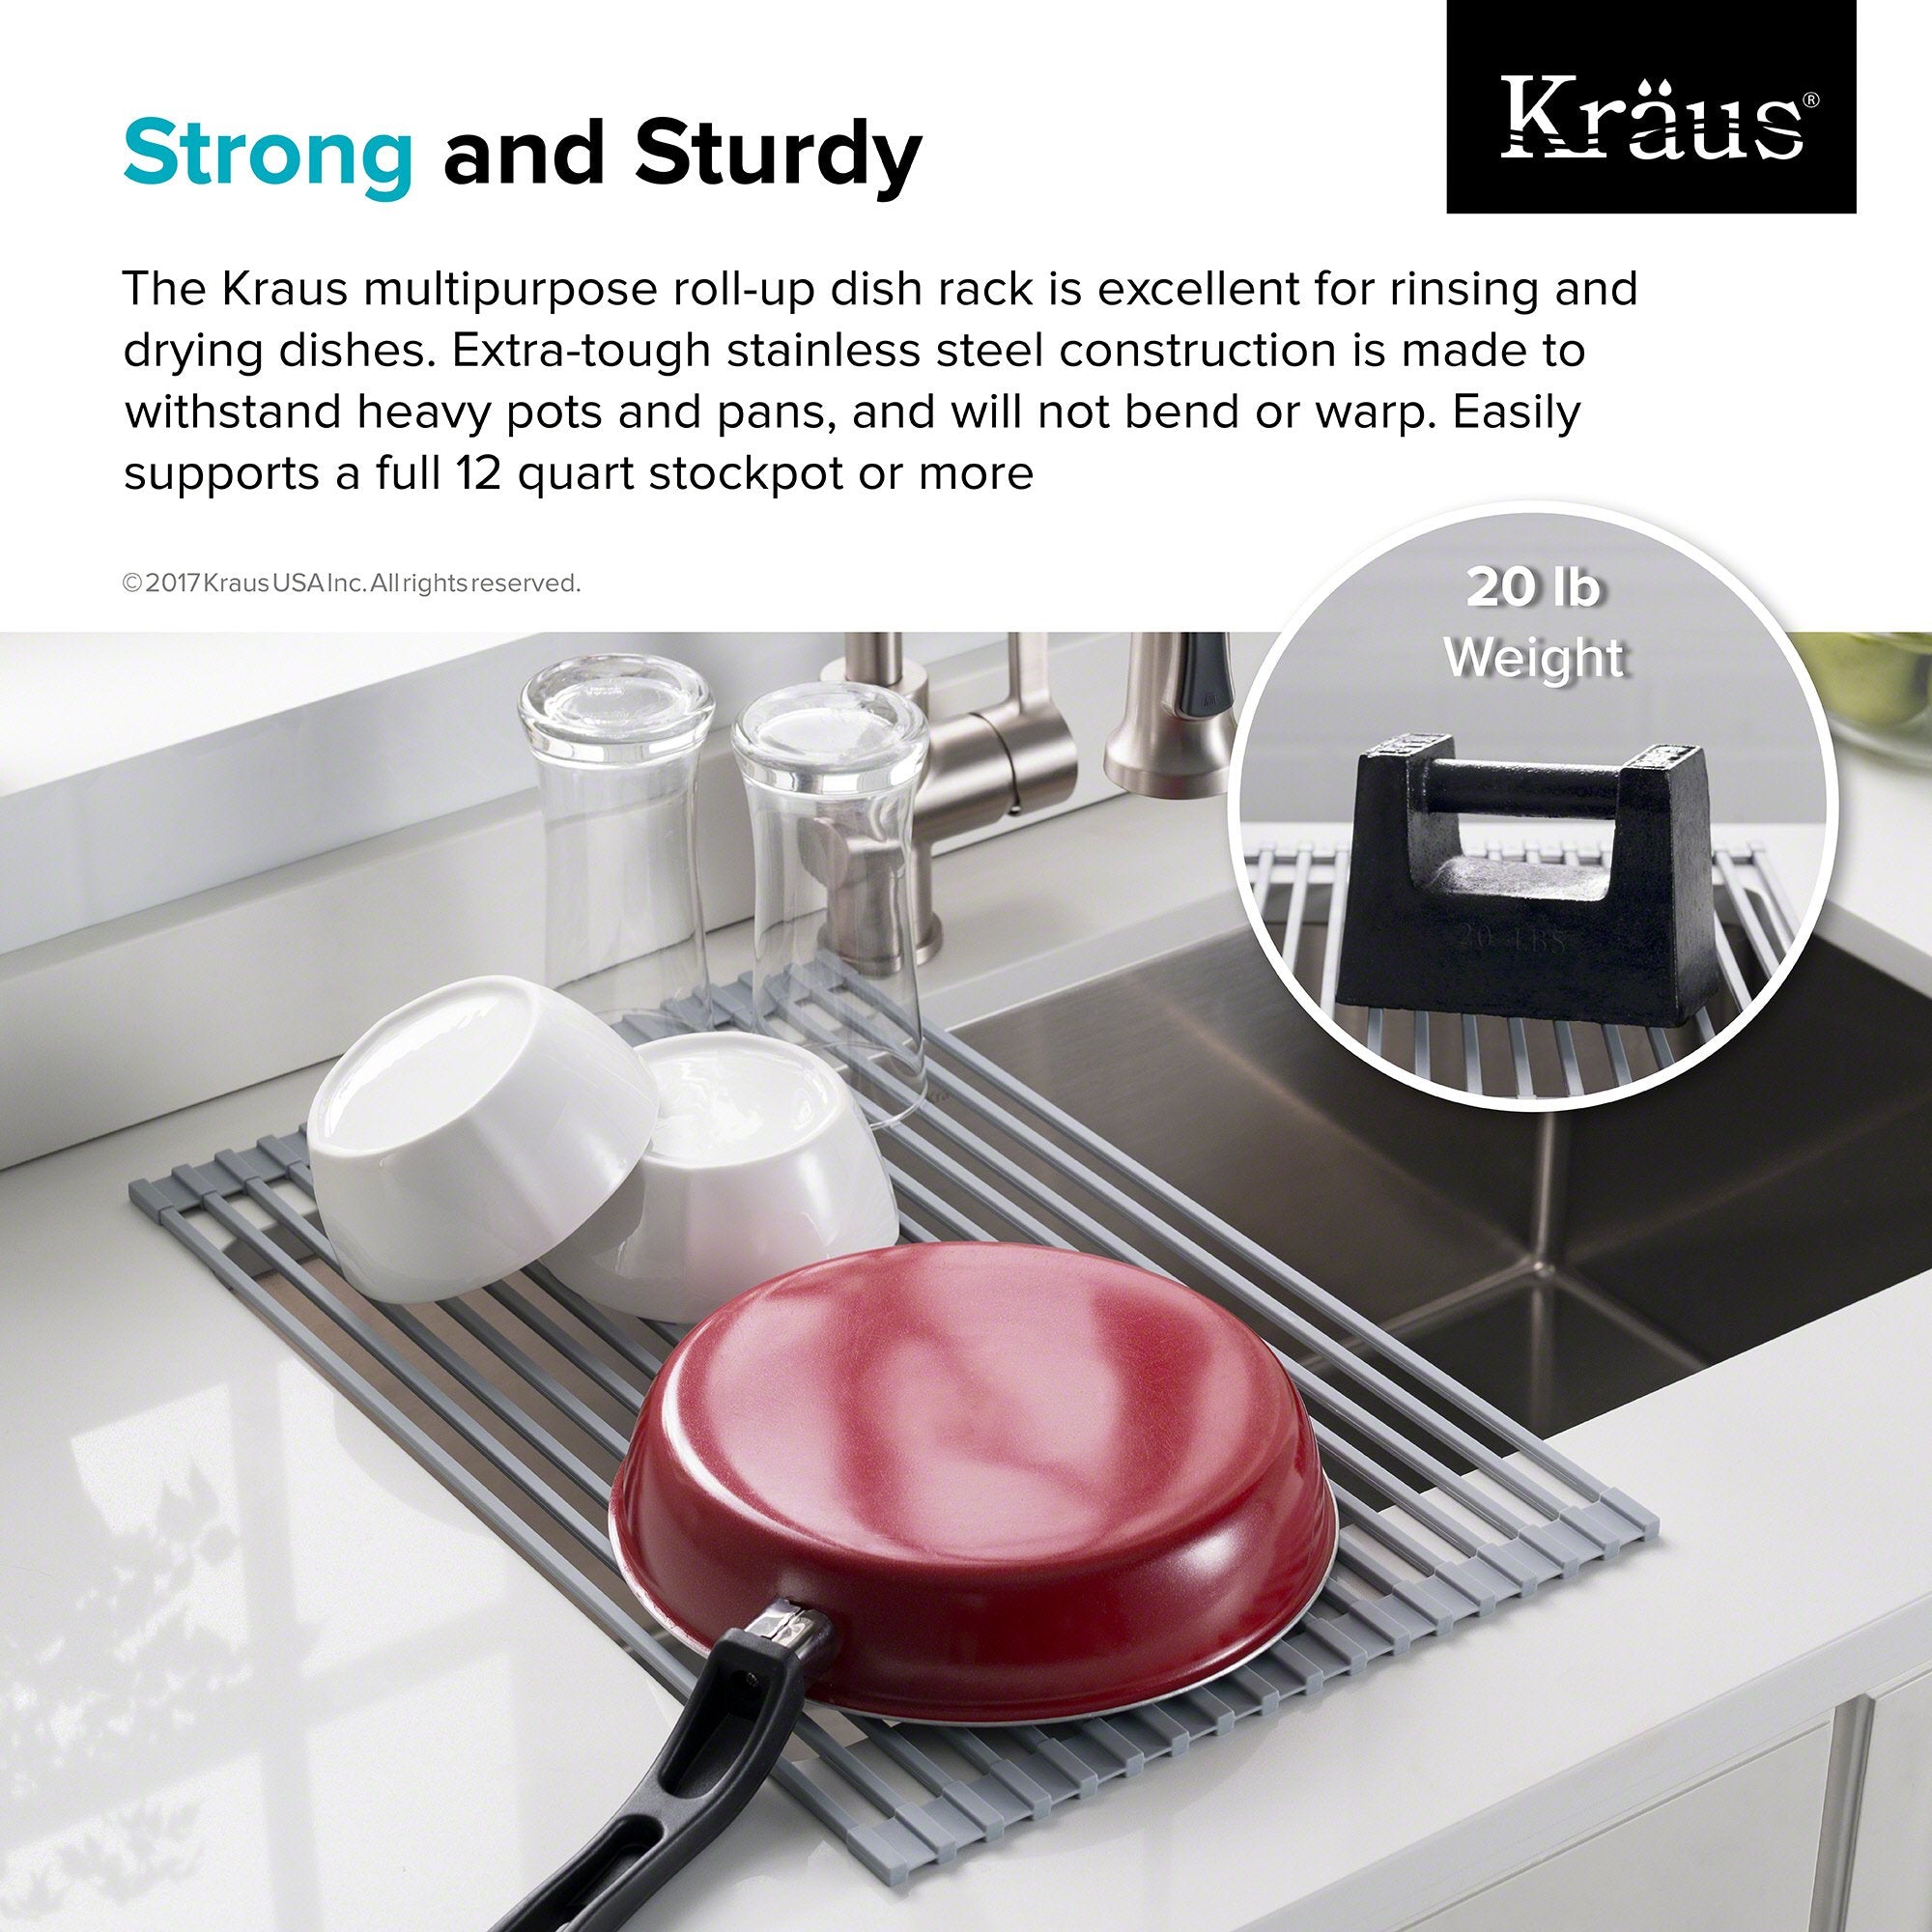 Kraus KRM-10DG Multipurpose Over-Sink Roll-Up Dish Drying Rack Dark Grey